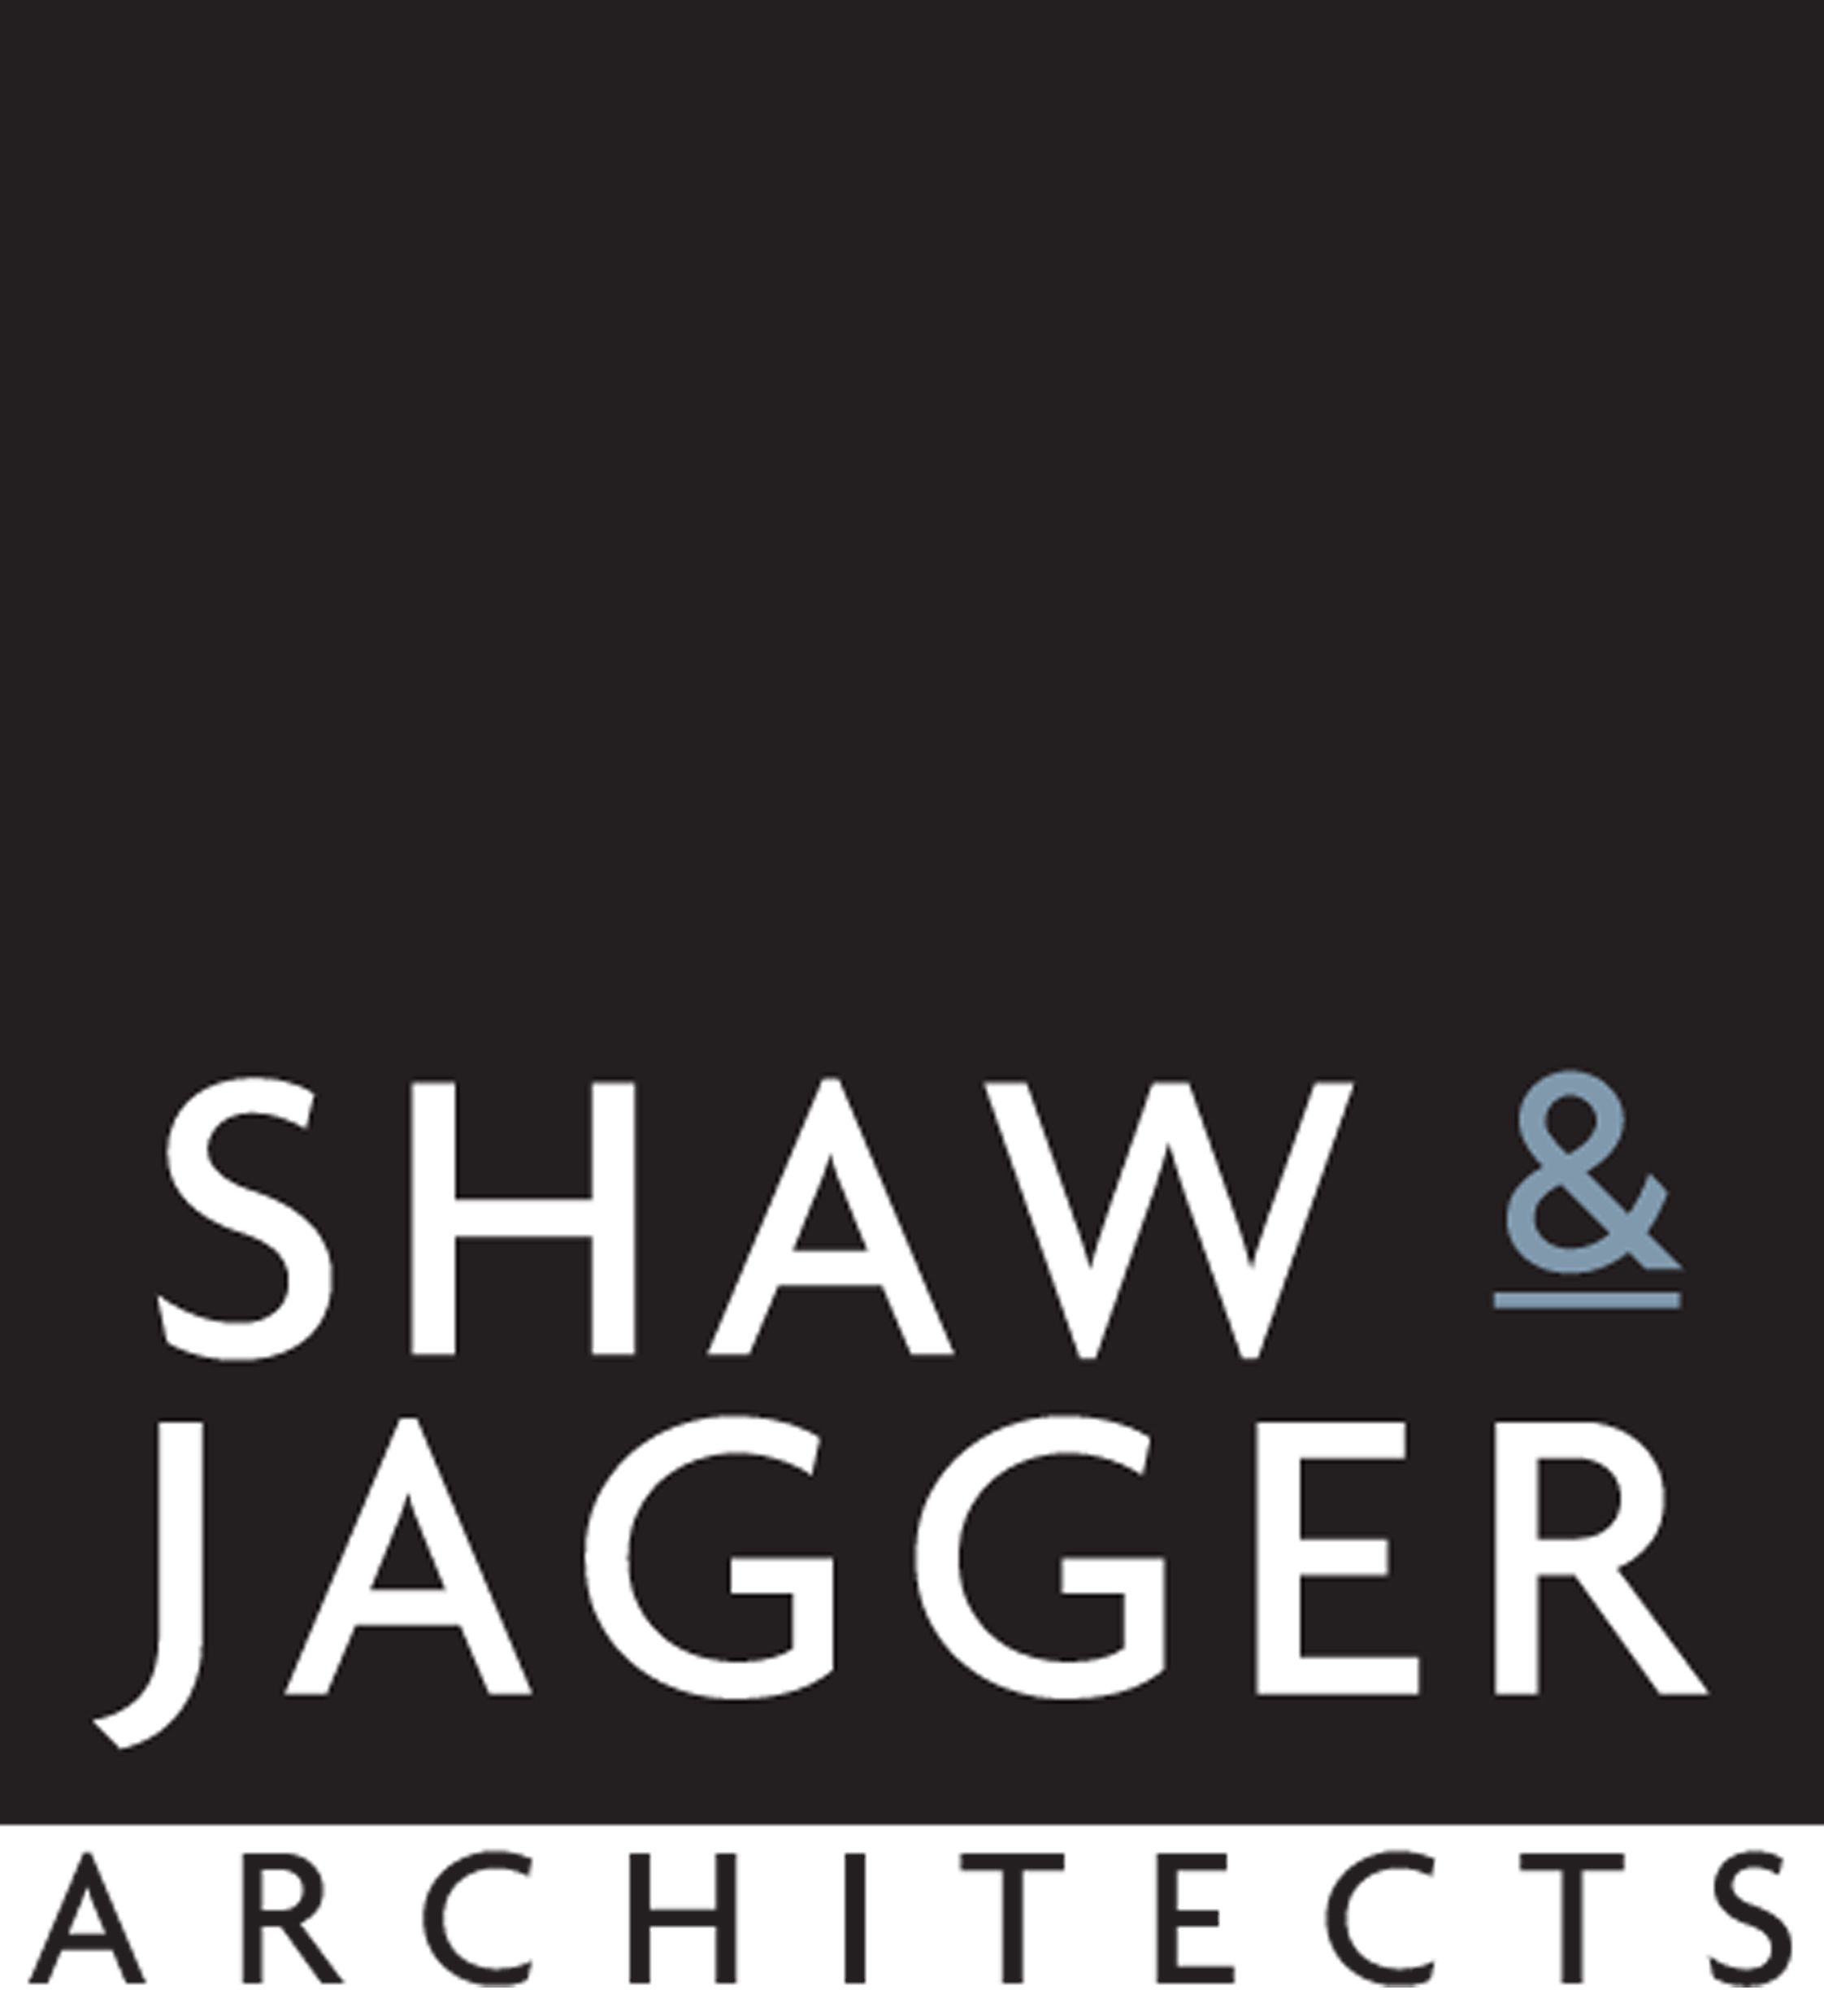 Shaw & Jagger